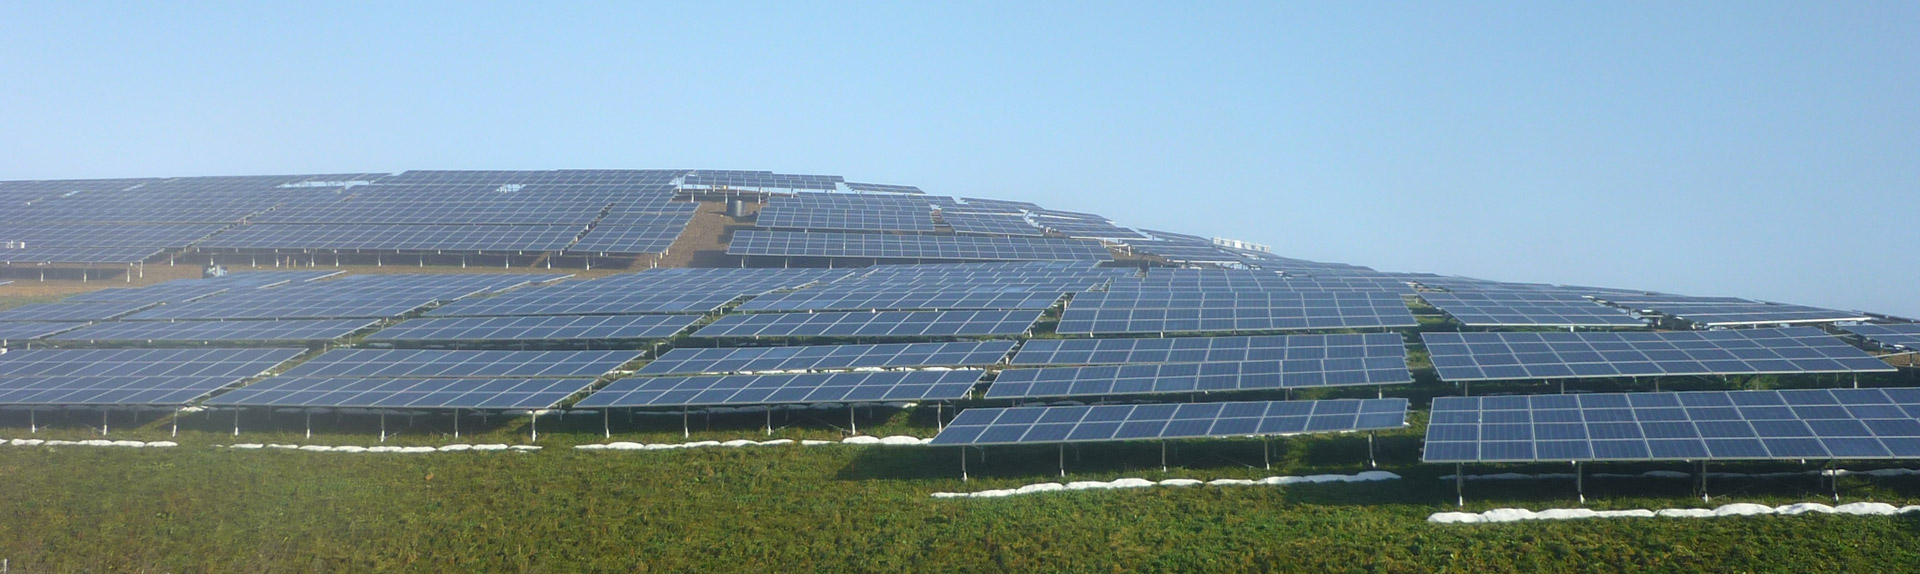 Impianto di riferimento Solar-Log™ a Nattheim, Germania